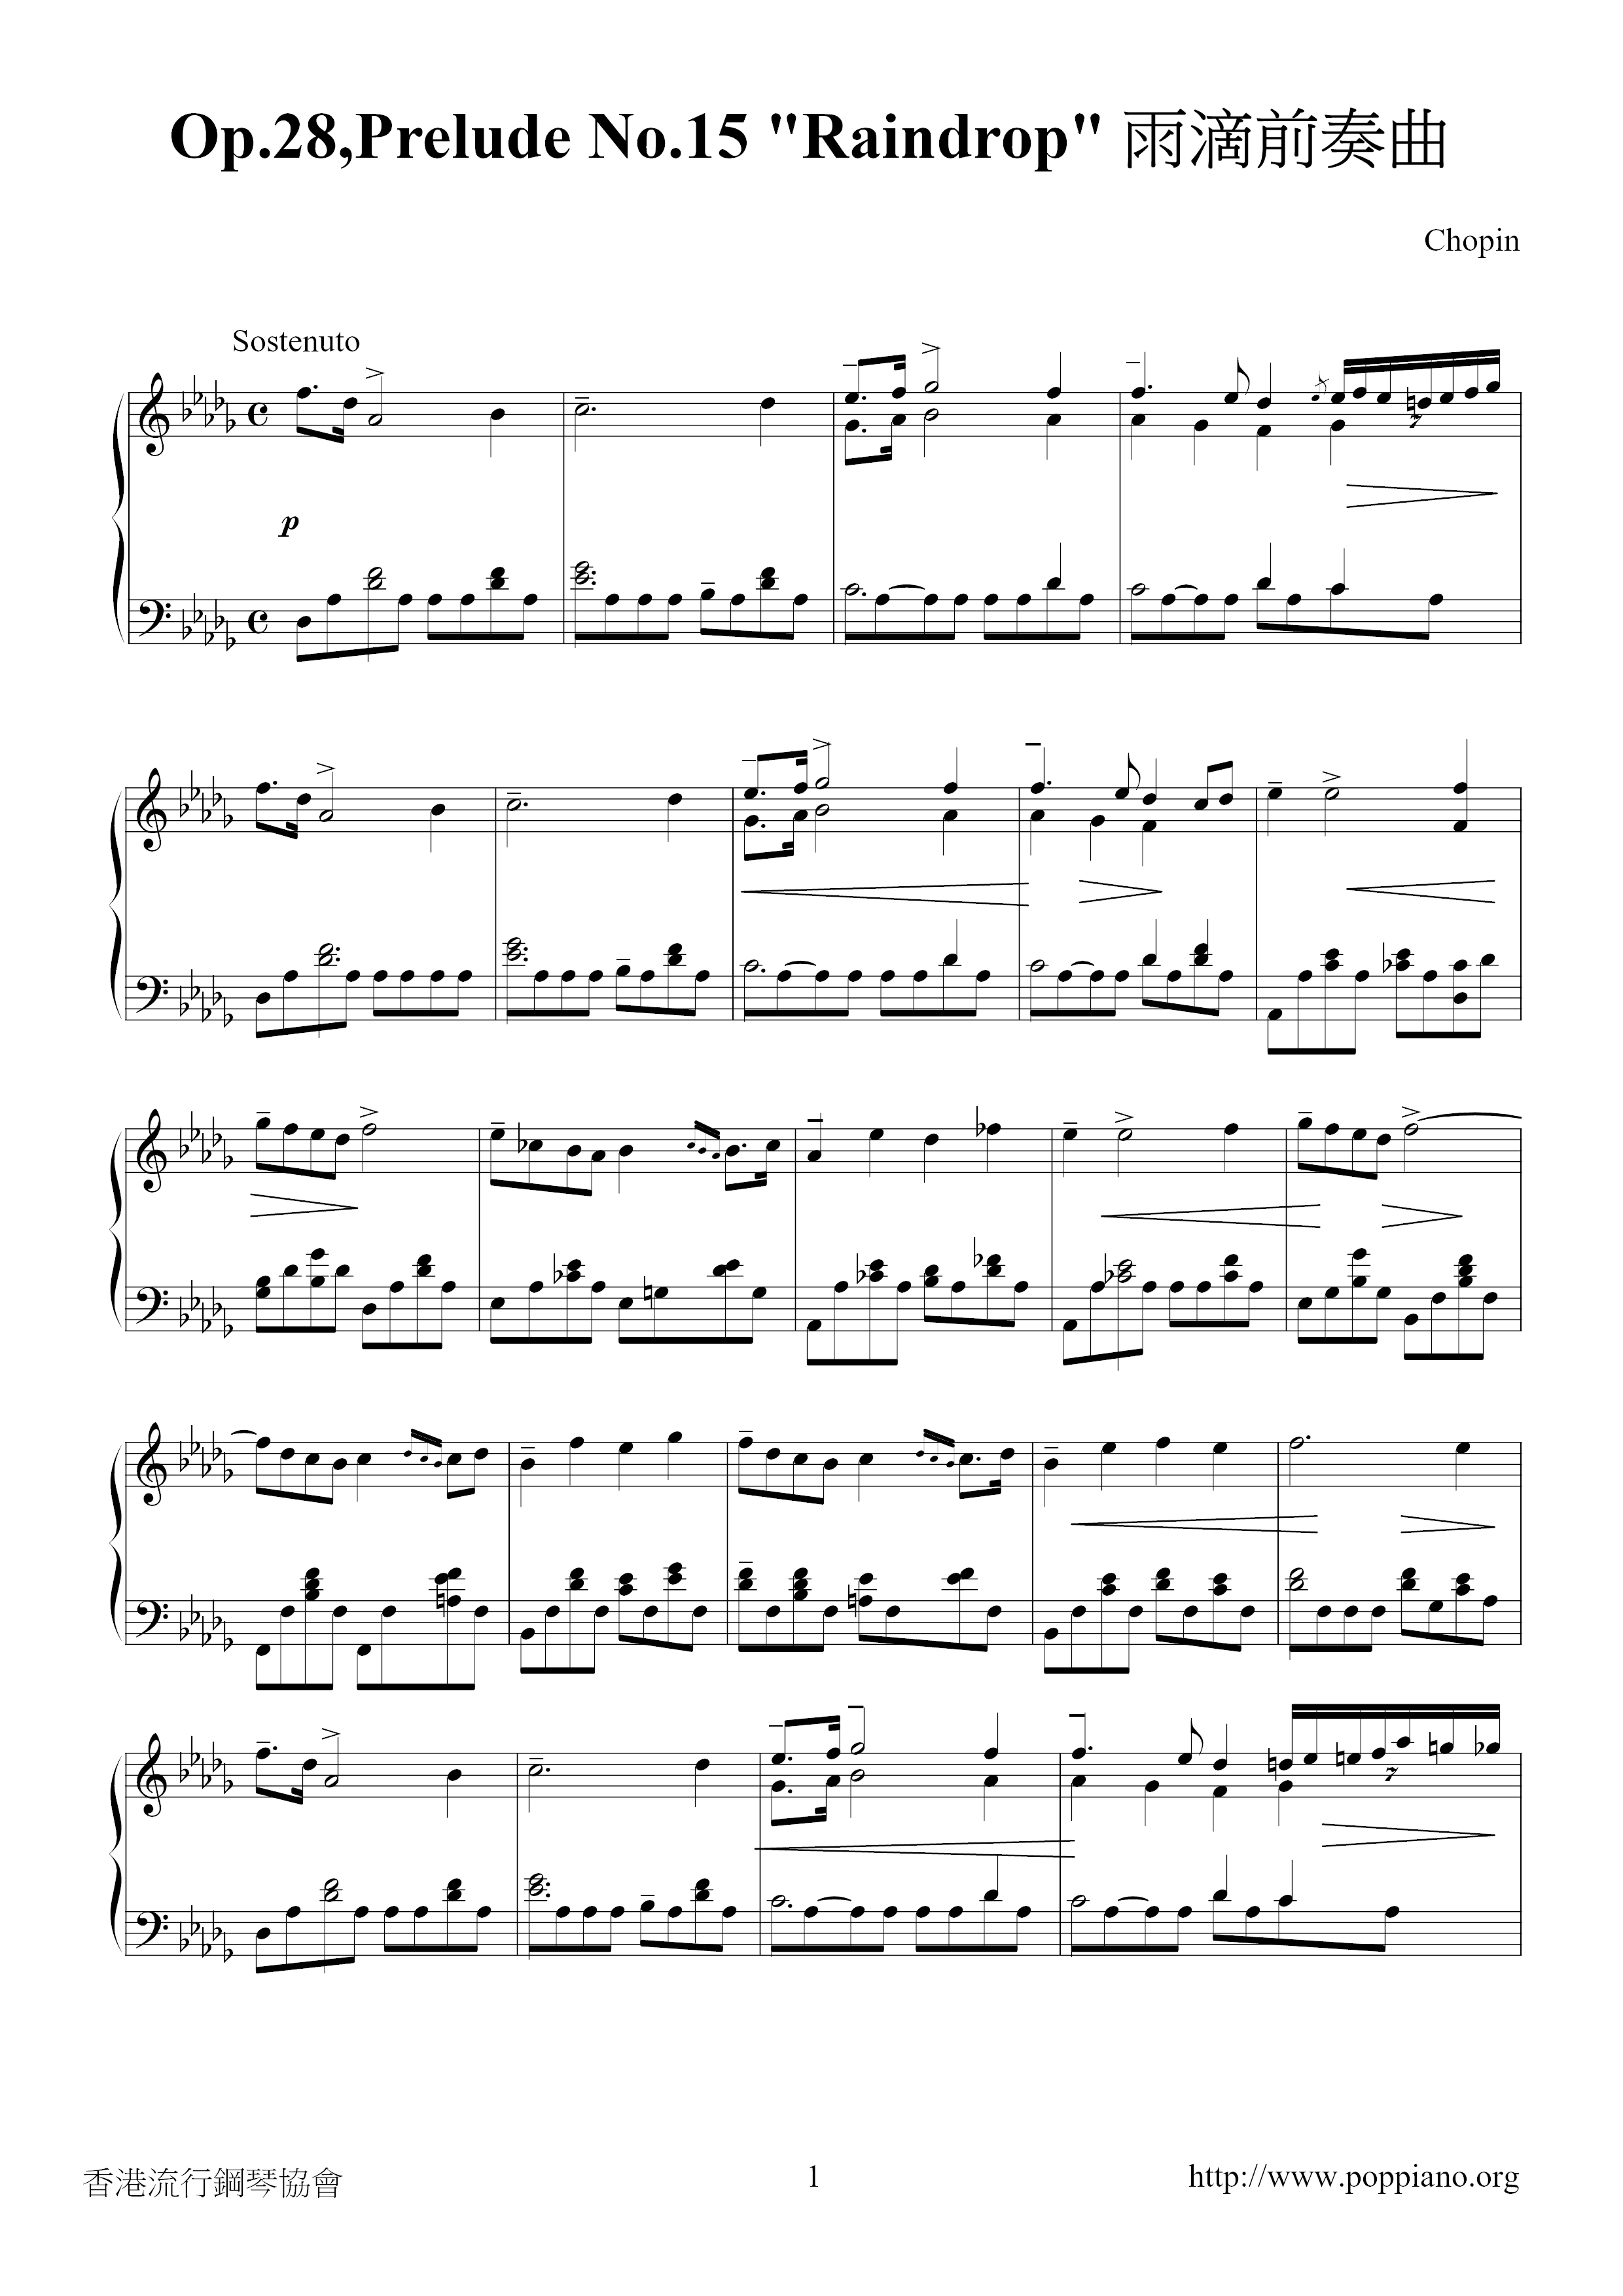 Op. 28, Prelude No. 15 Raindrop 雨滴前奏曲琴譜